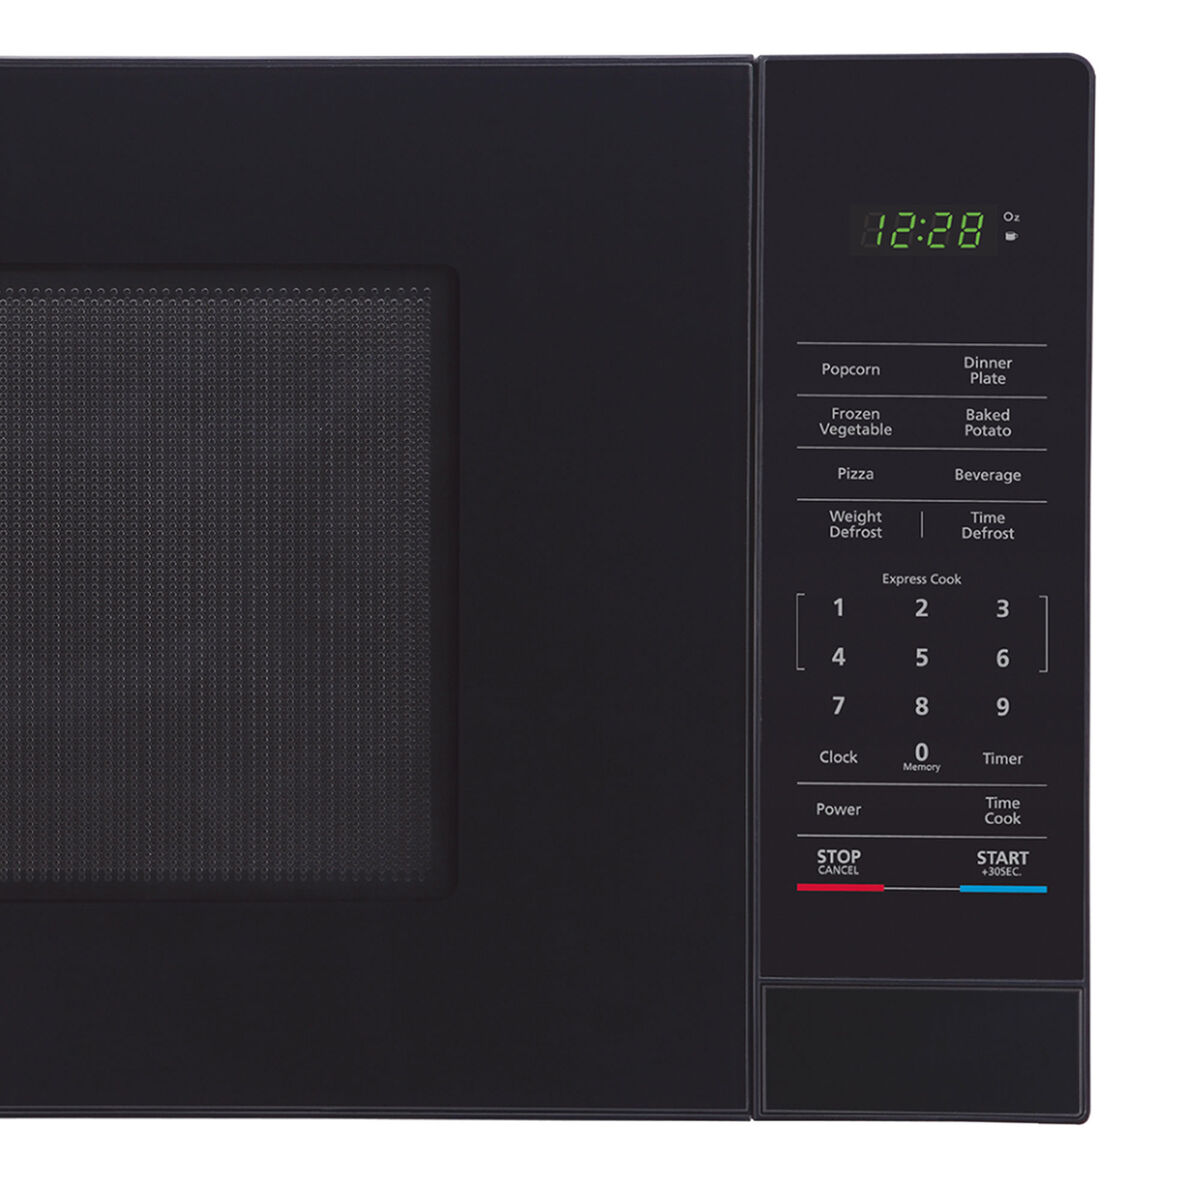 MAGIC CHEF 1000-Watt Countertop Microwave Oven - Silver, 1.1 cu ft